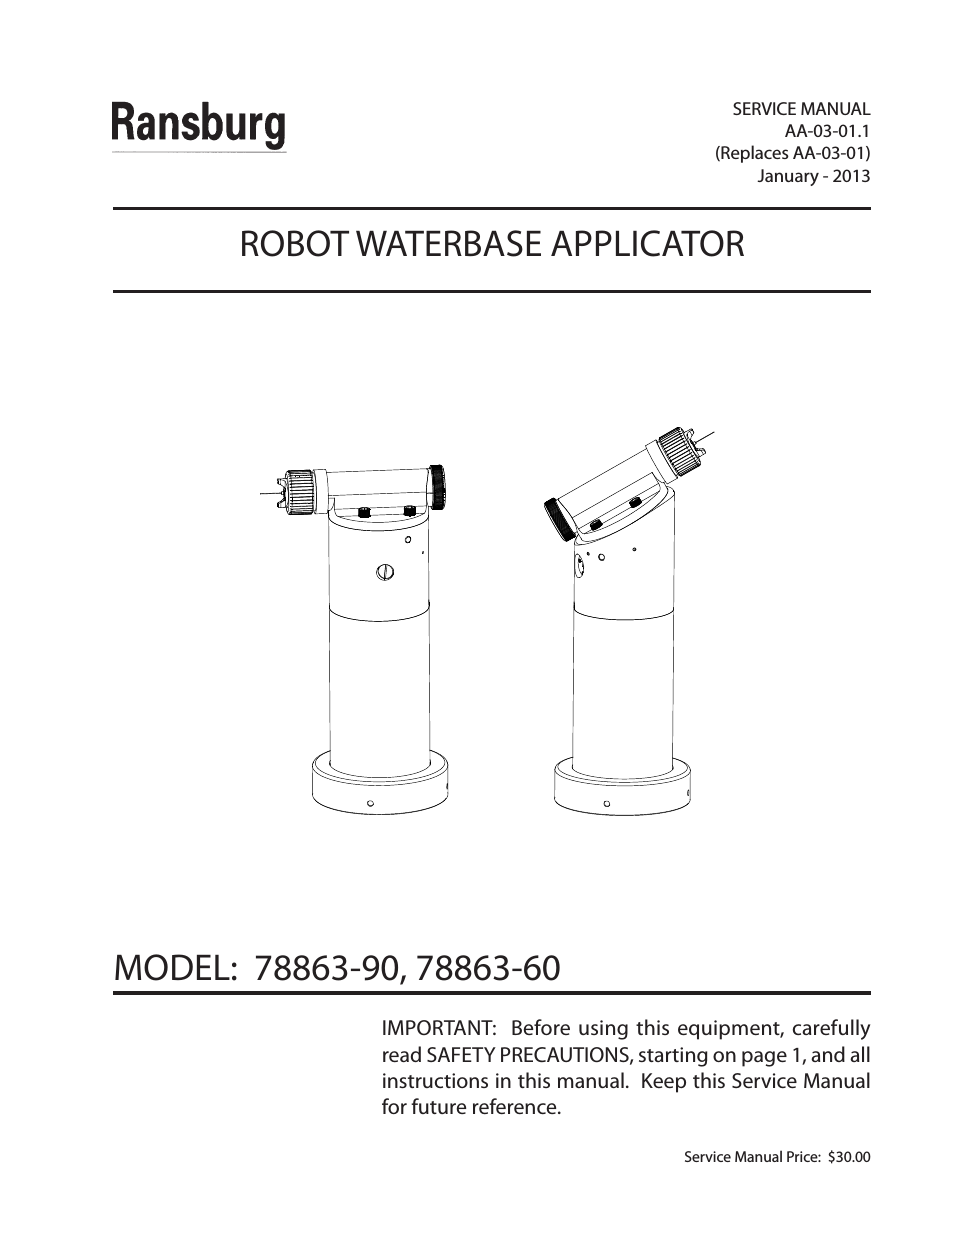 Evolver Water Applicator 78863-90, 78863-60